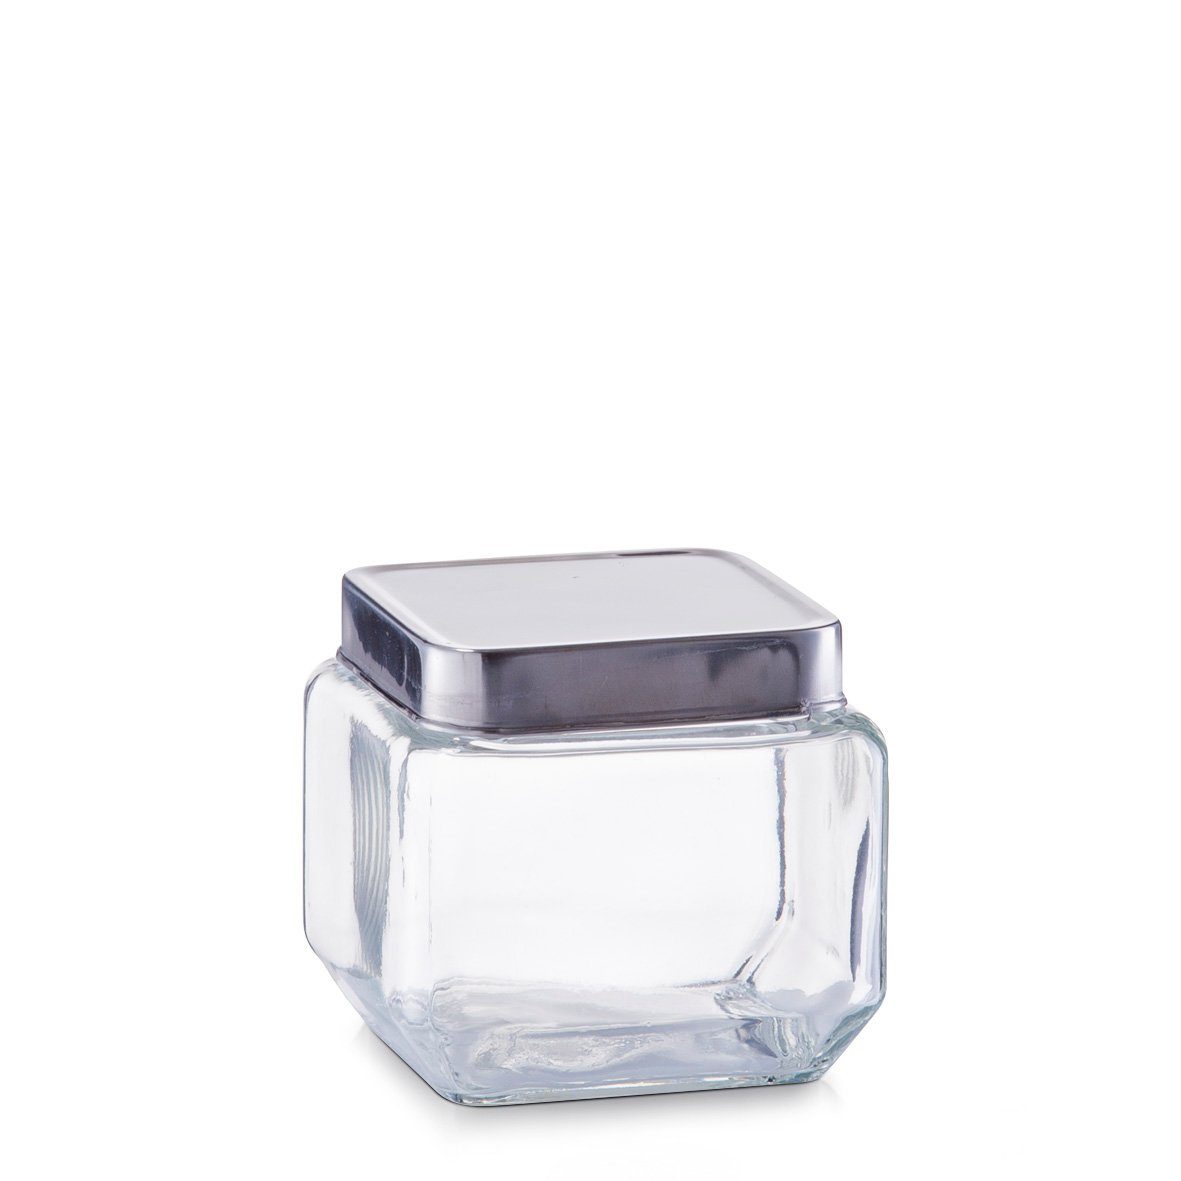 Zeller Present Vorratsglas Vorratsglas m. Edelstahldeckel, Glas/Edelstahl 18/0, 700 ml, Glas/Edelstahl 18/0, transparent, 11 x 11 x 10,5 cm